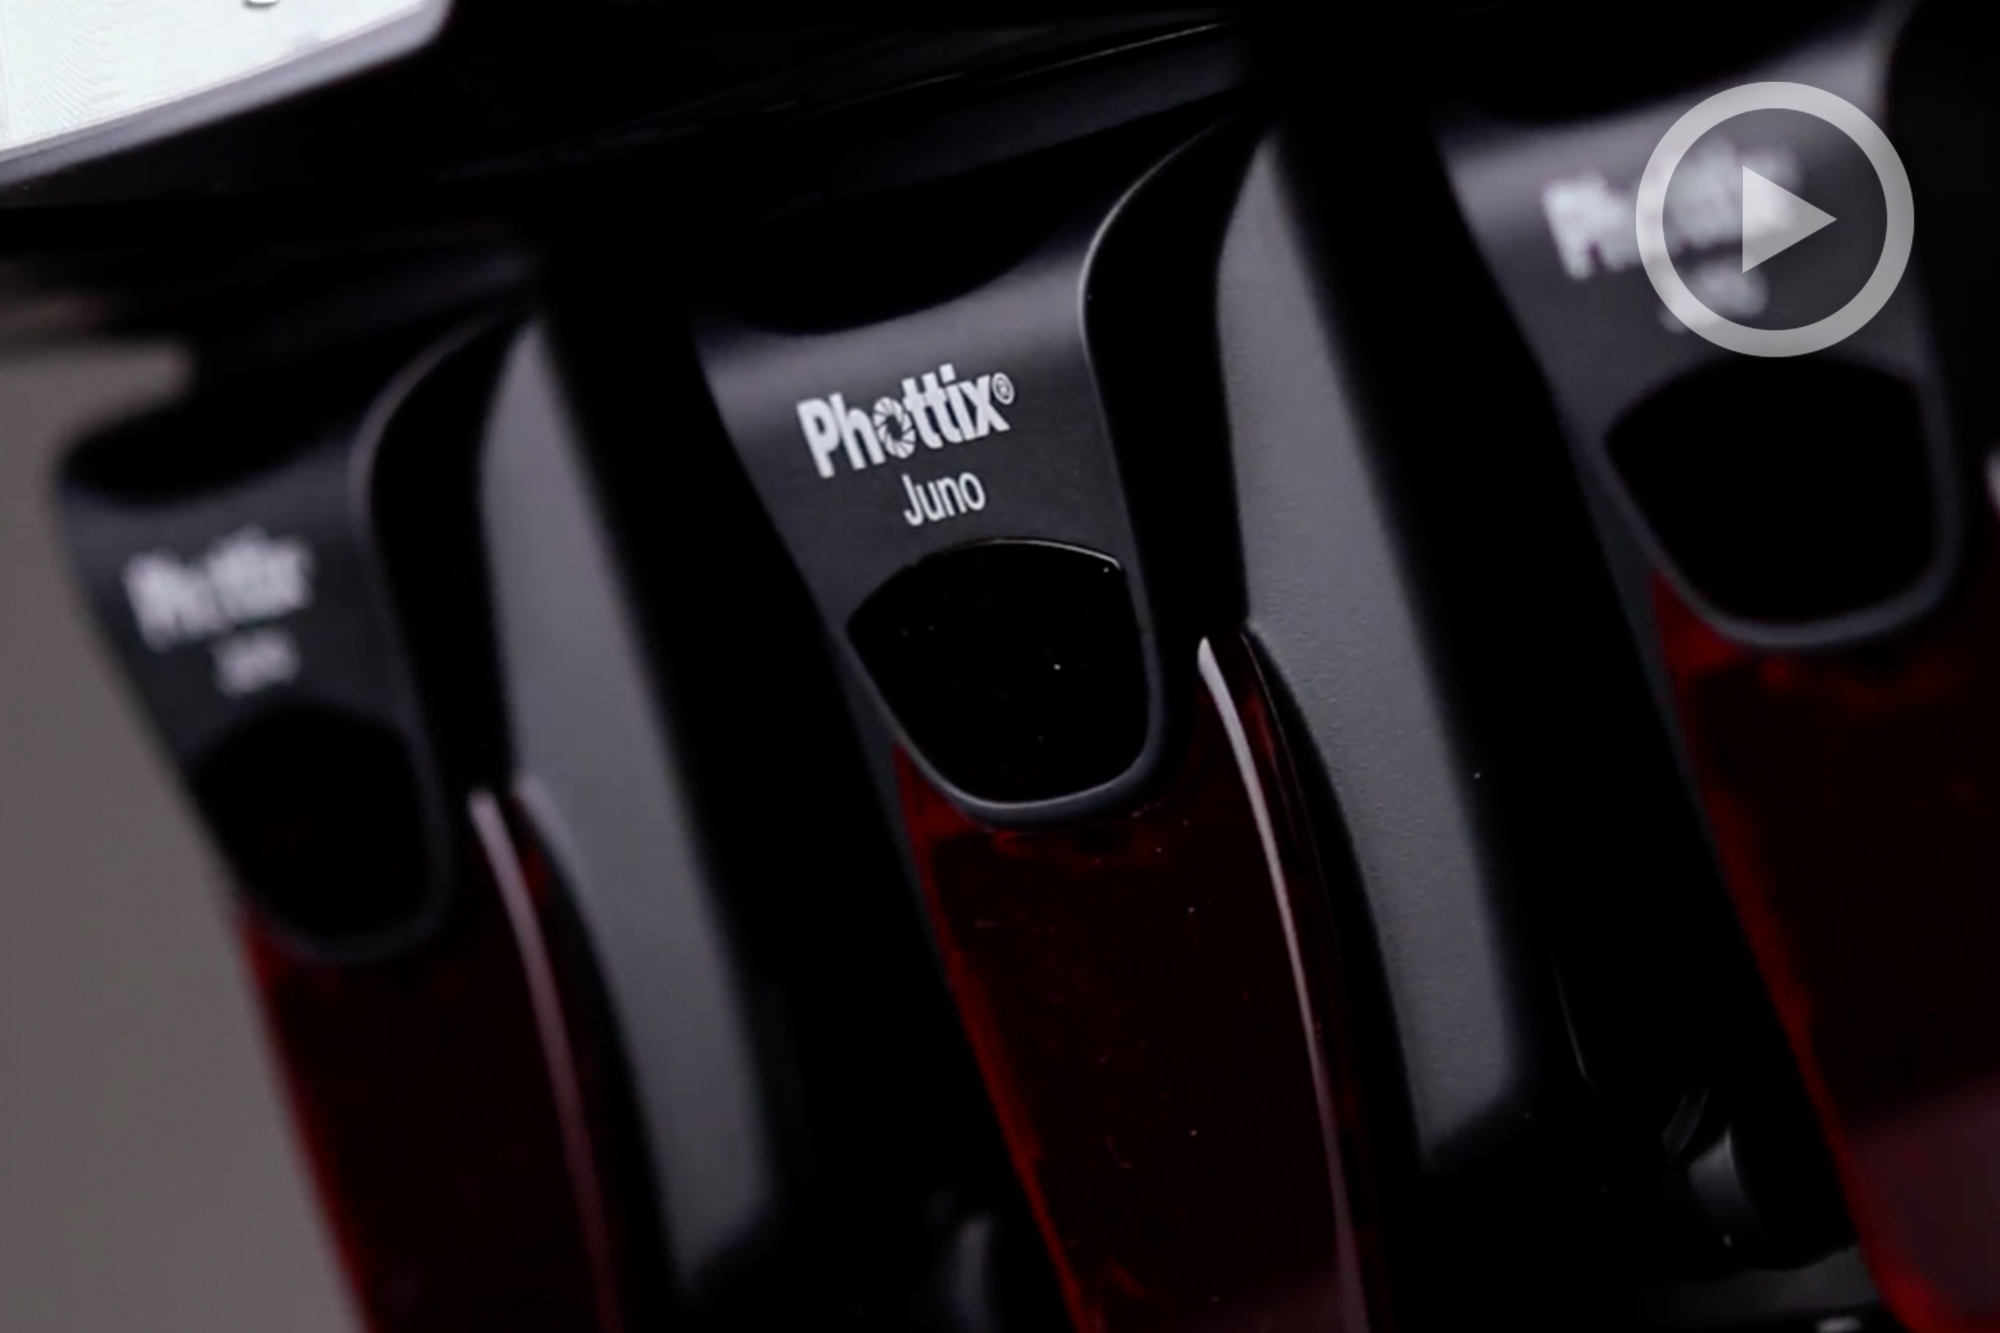 The Phottix Juno | Phottix Announces New Affordable Flash